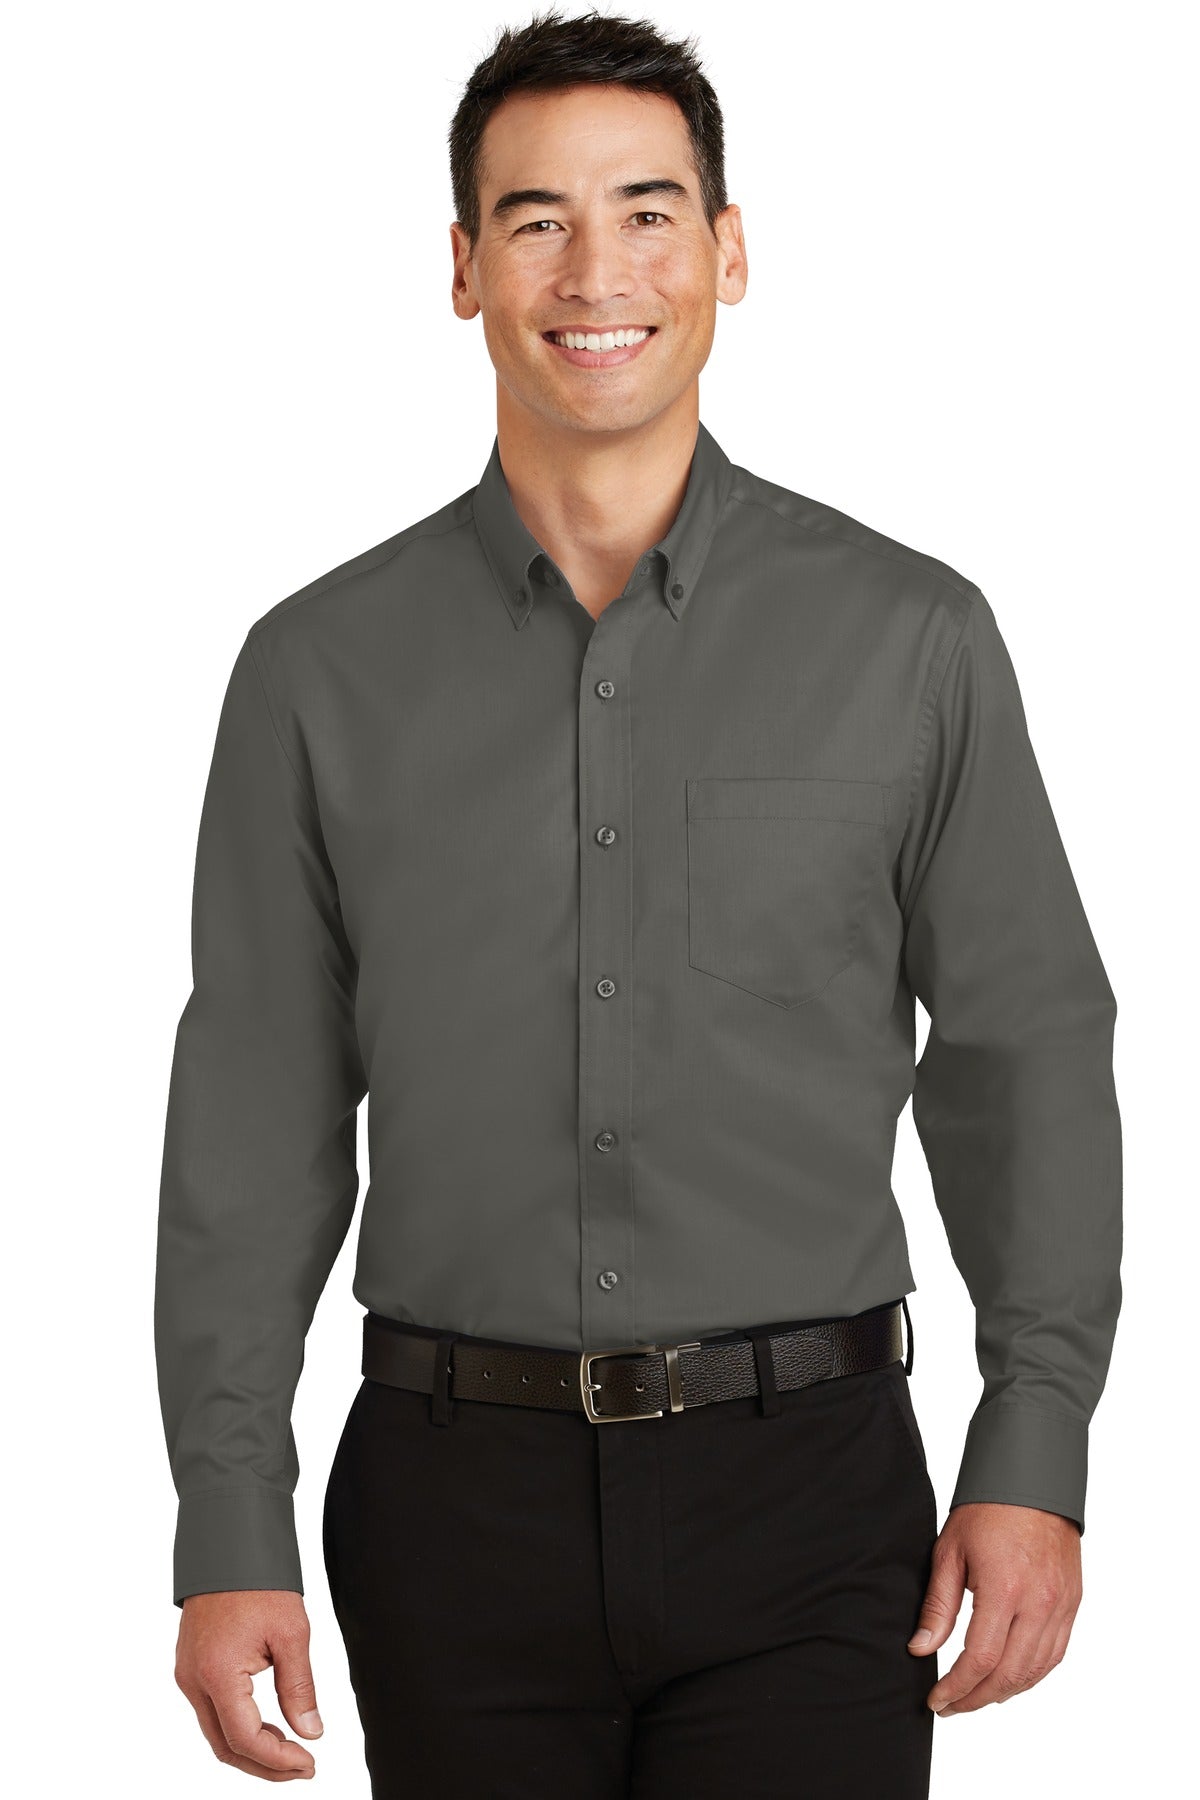 Port Authority Tall SuperPro™ Twill Shirt. TS663